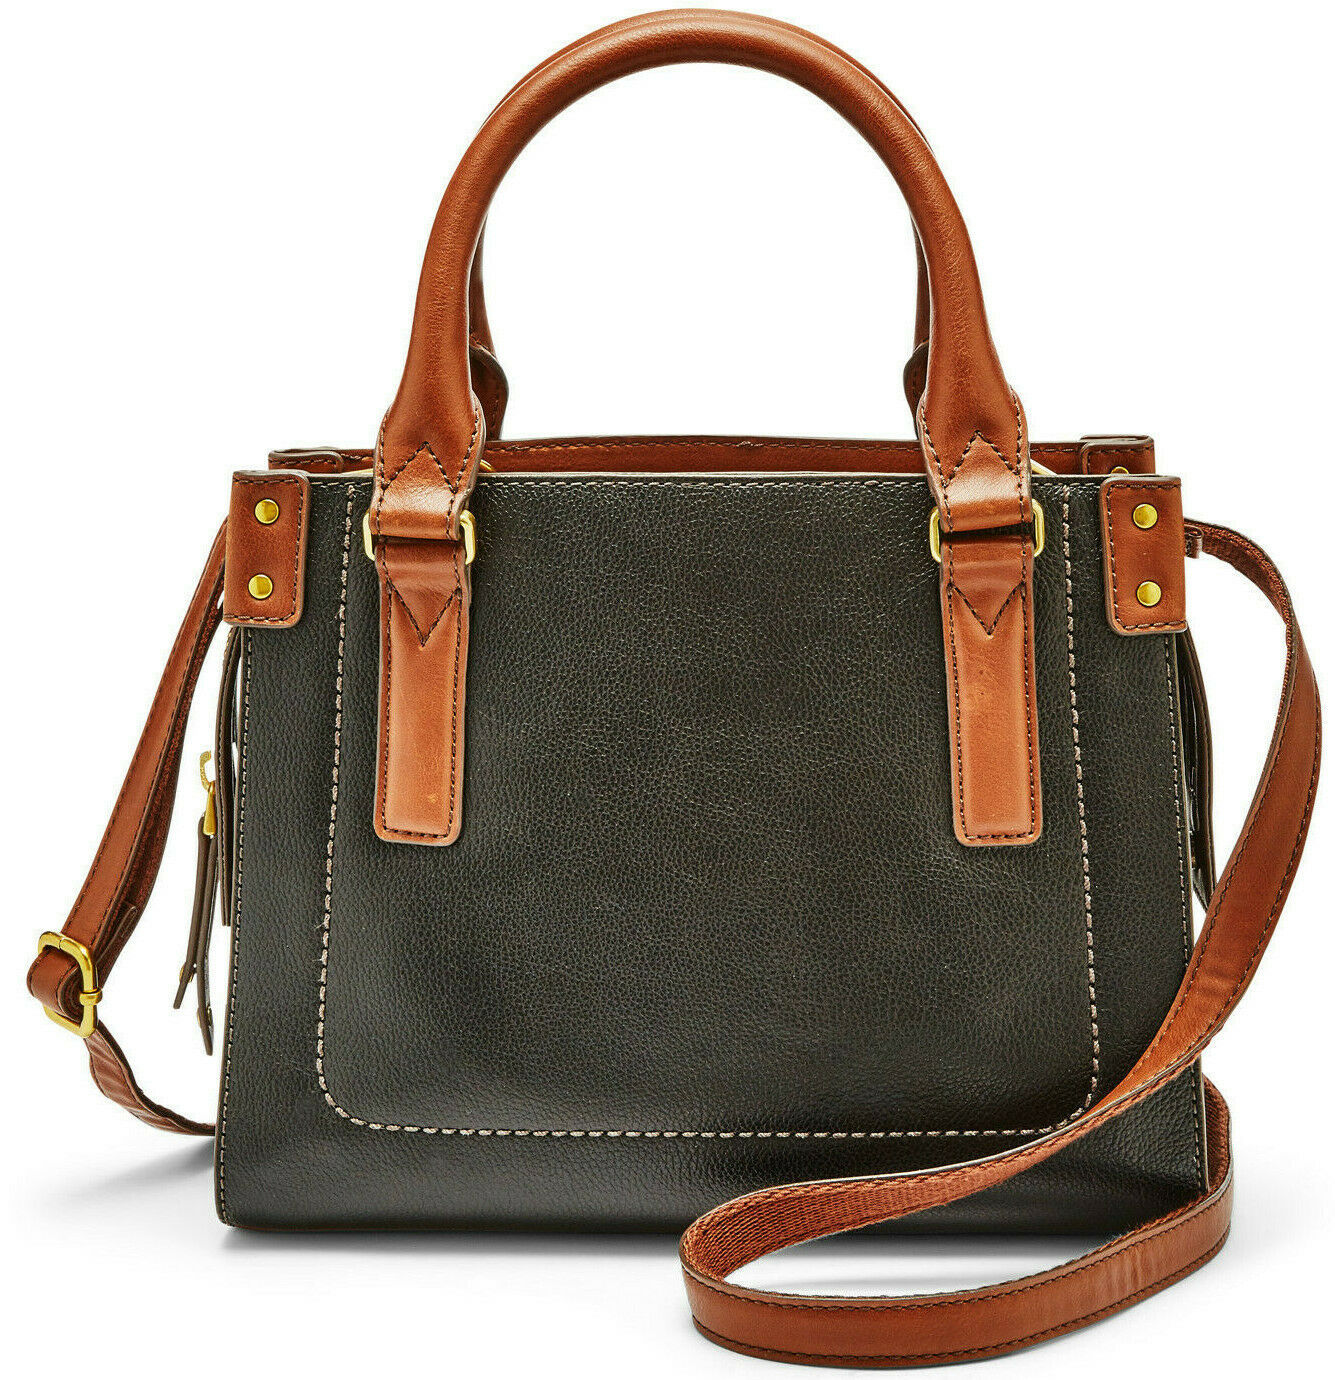 Fossil Claire Black Leather Mini Satchel Crossbody Bag SHB2025001 NWT $198 FS